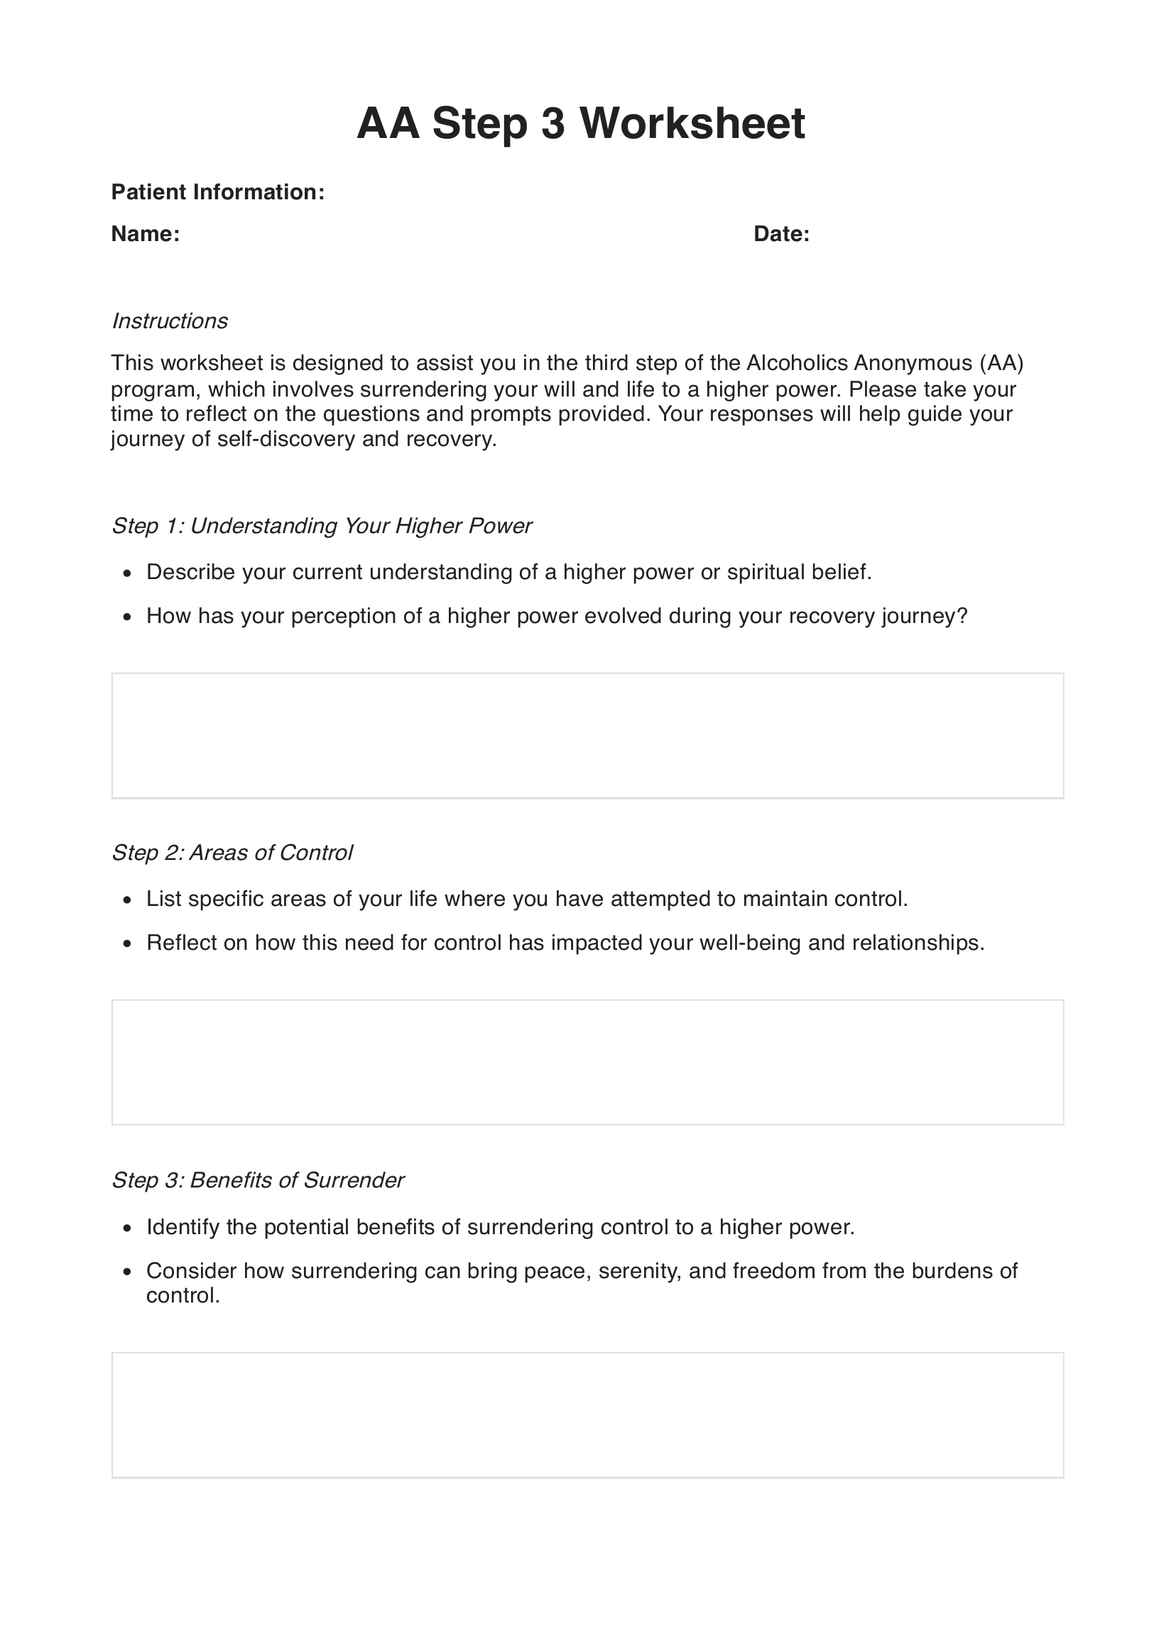 AA Step 3 Worksheets PDF Example